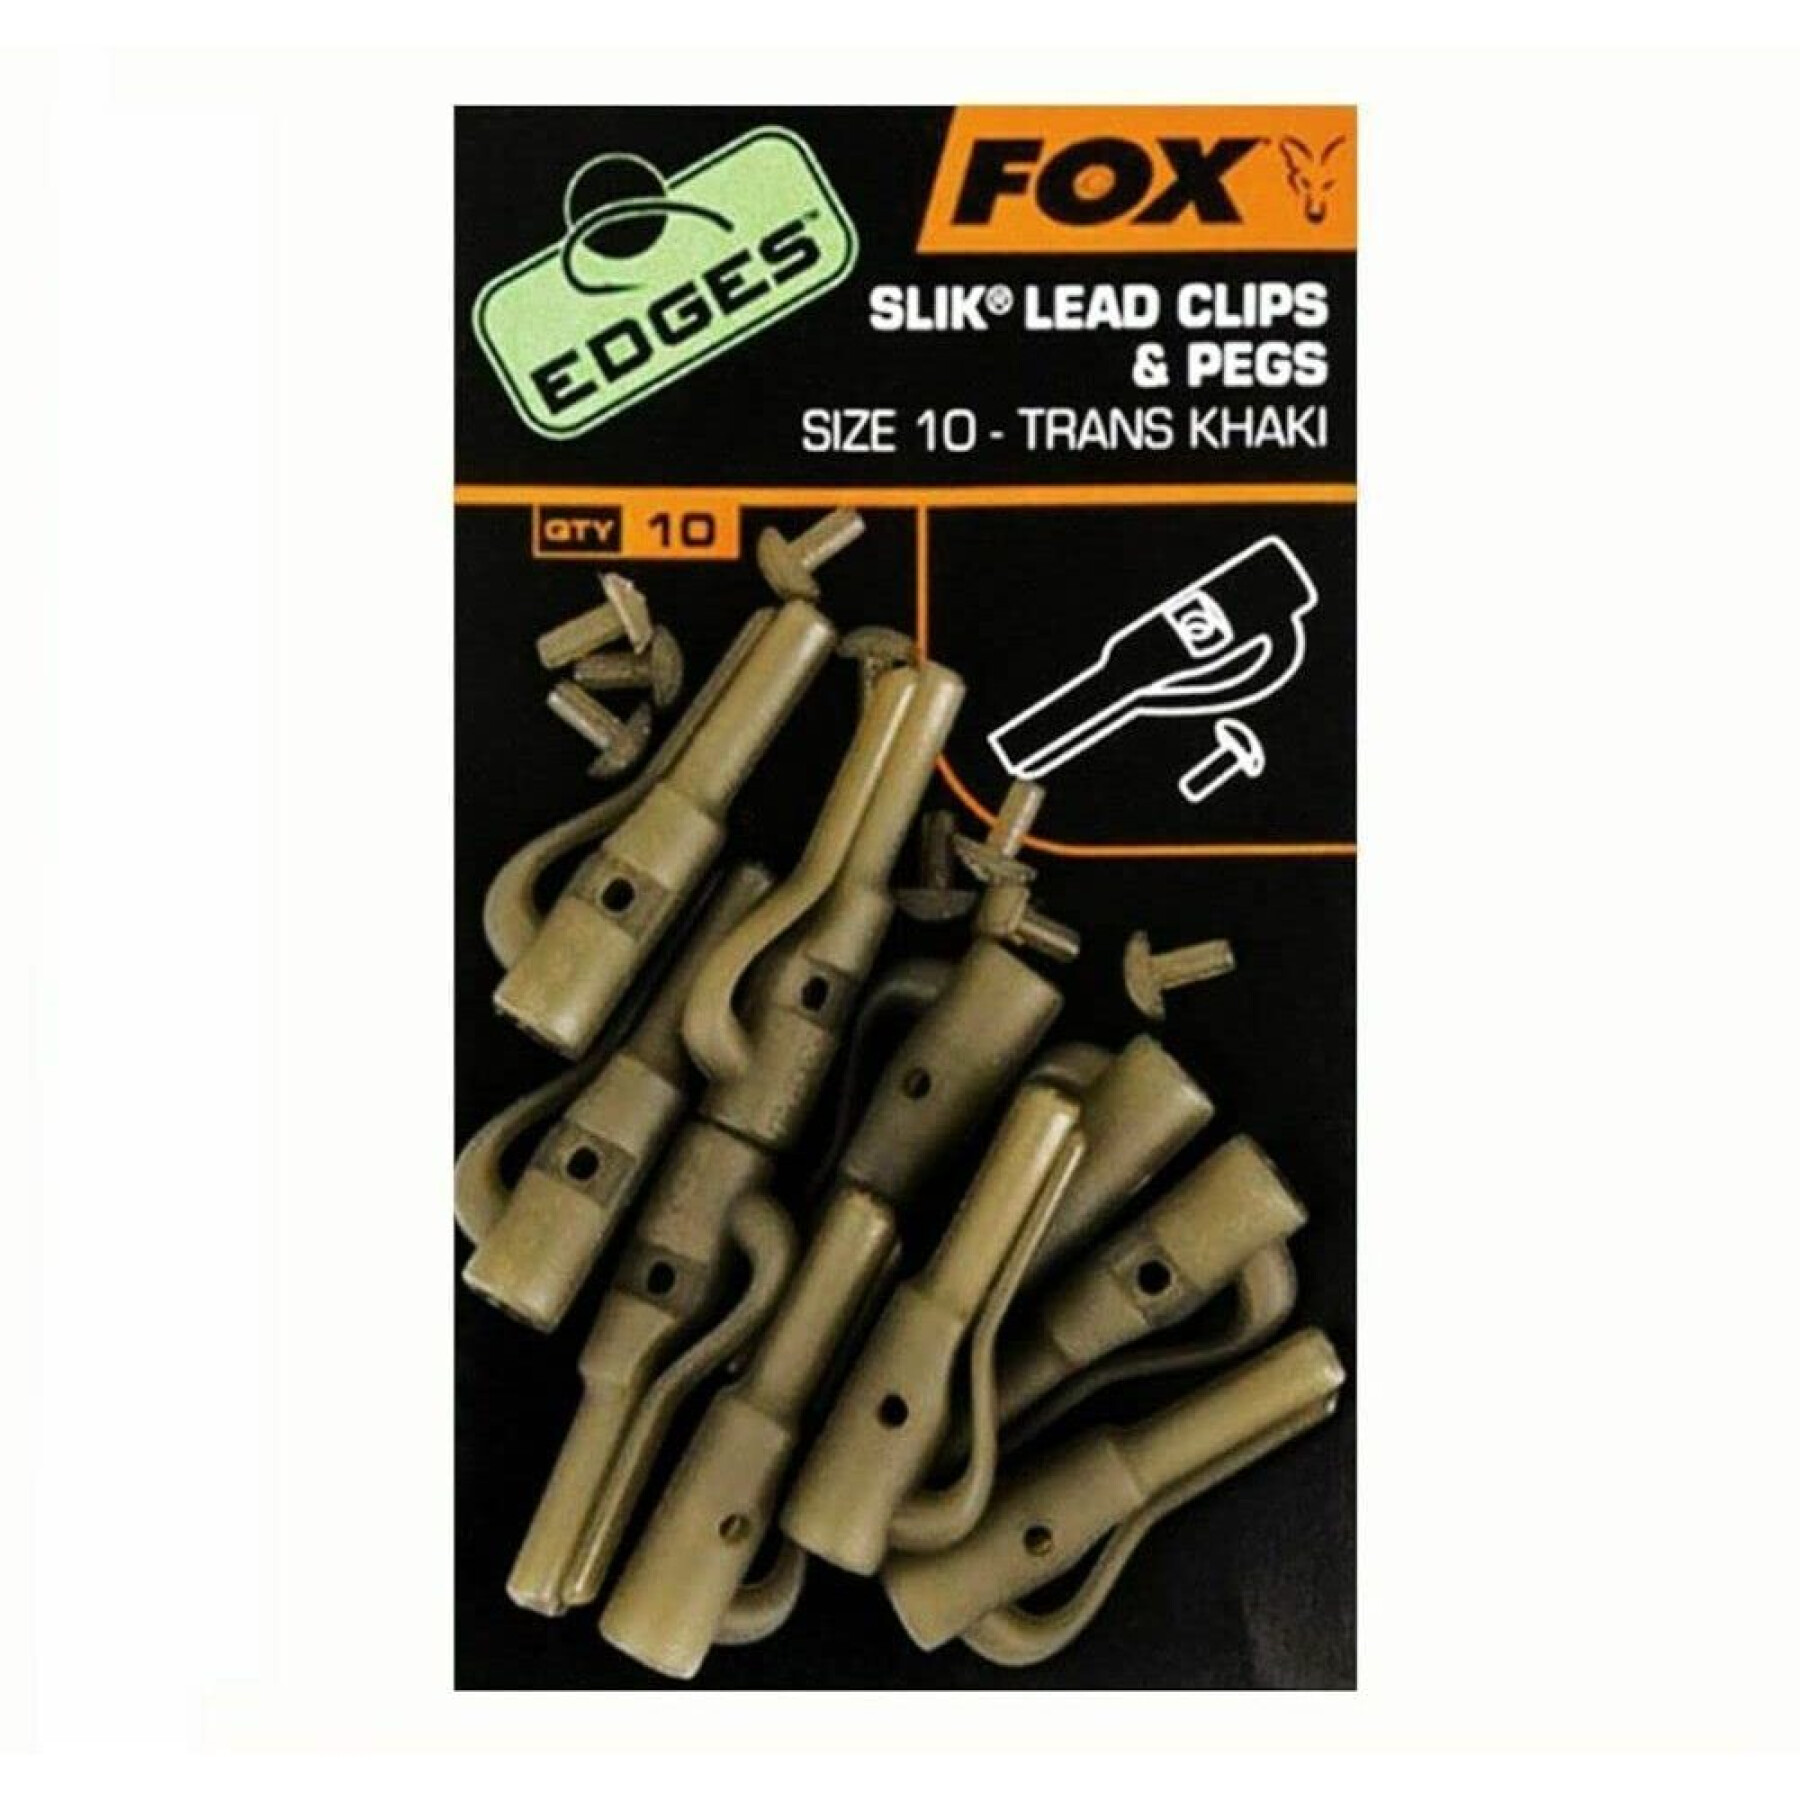 Slip-on pliers Fox Edges size 10